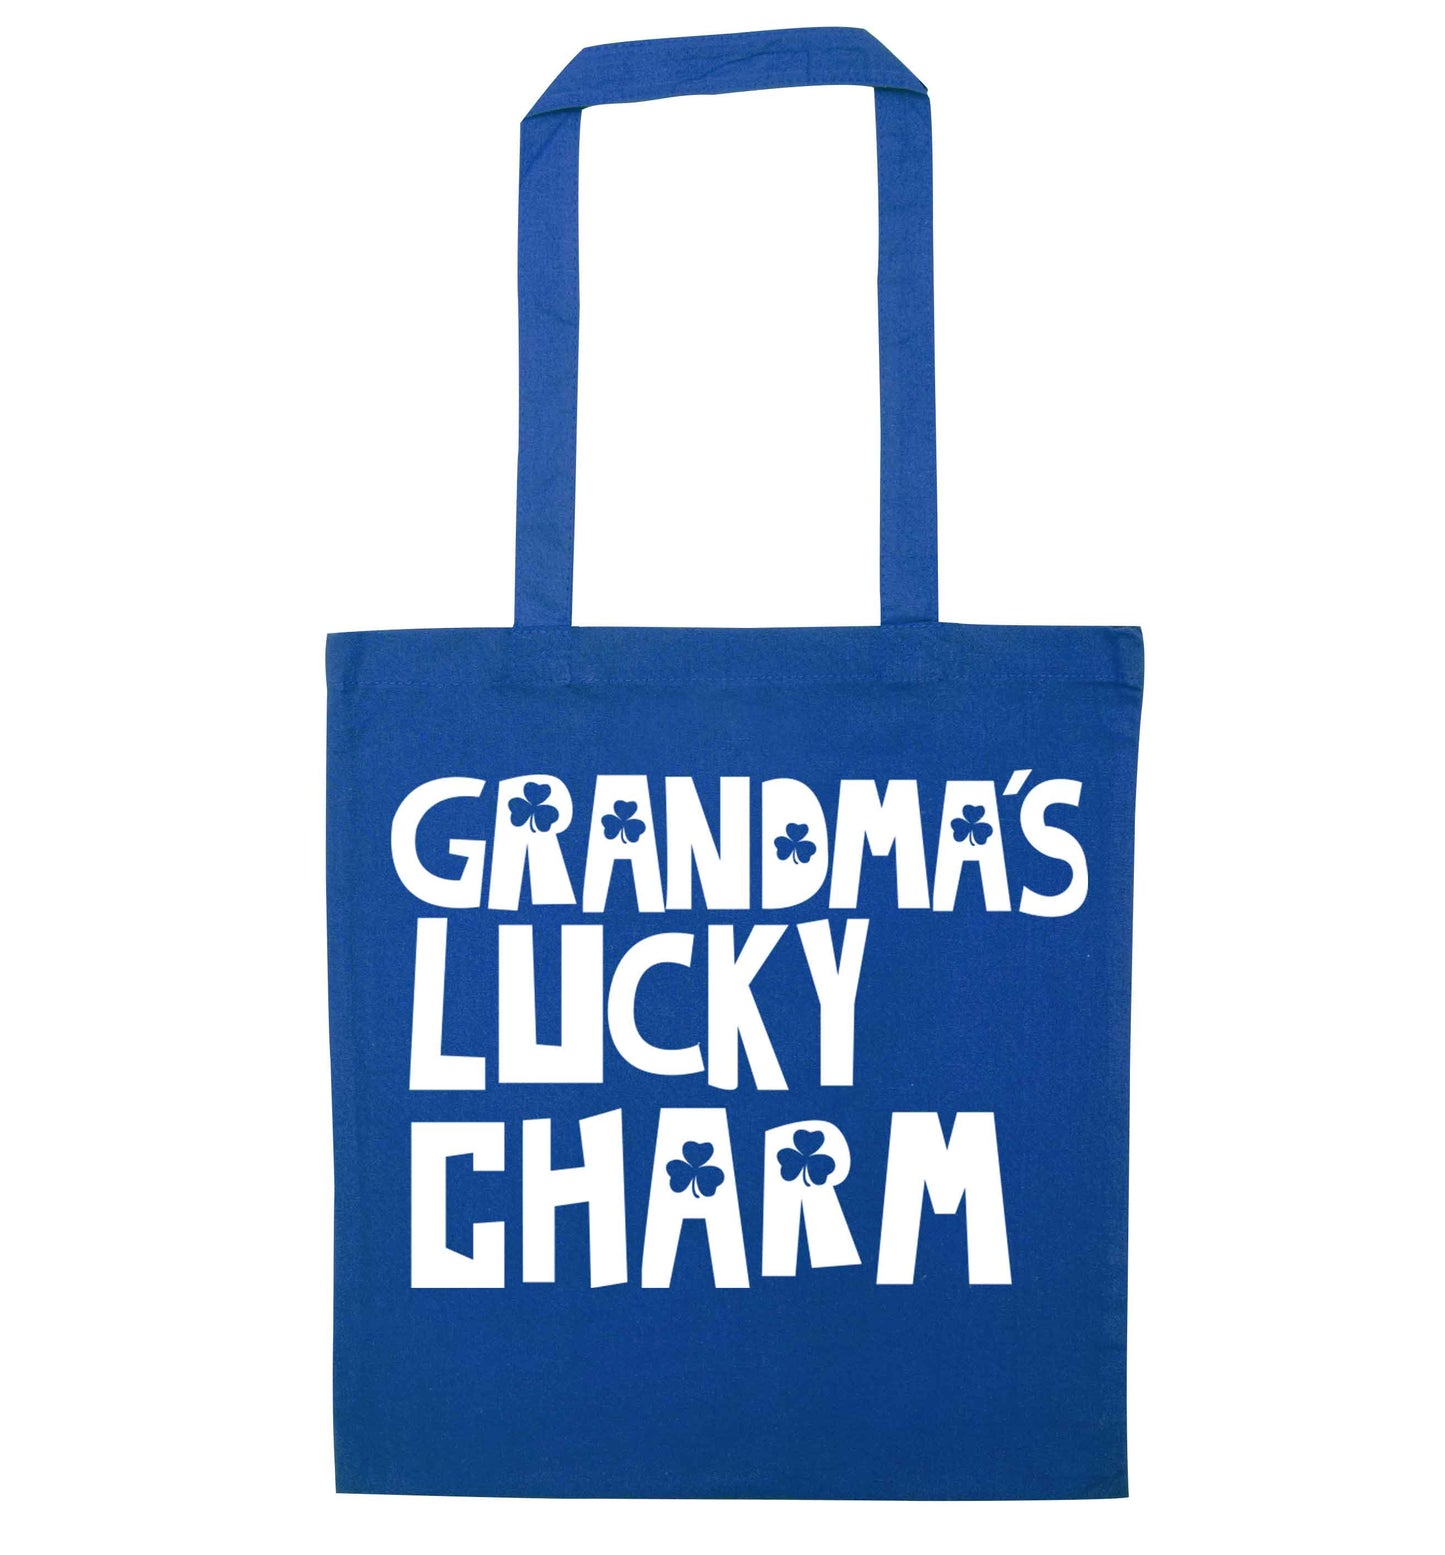 Grandma's lucky charm blue tote bag